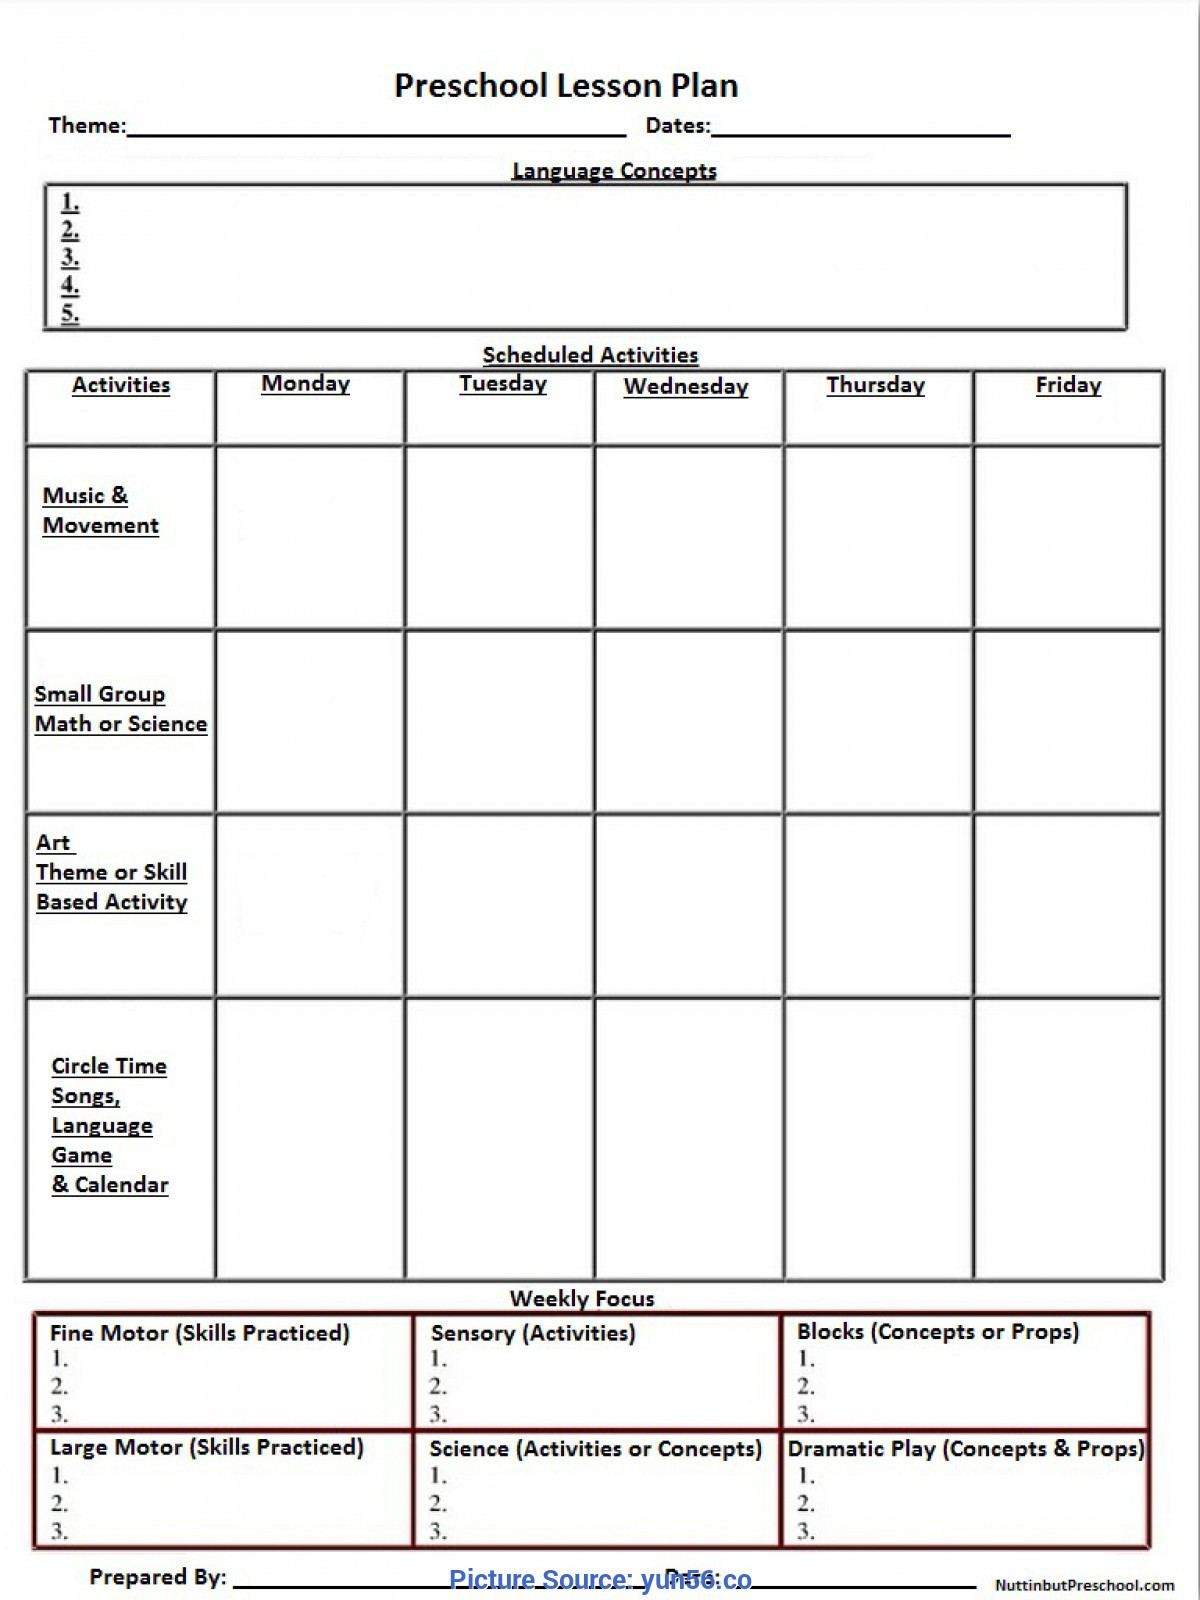 Creative Curriculum Lesson Plan Template Creative Curriculum Blank Lesson Plan